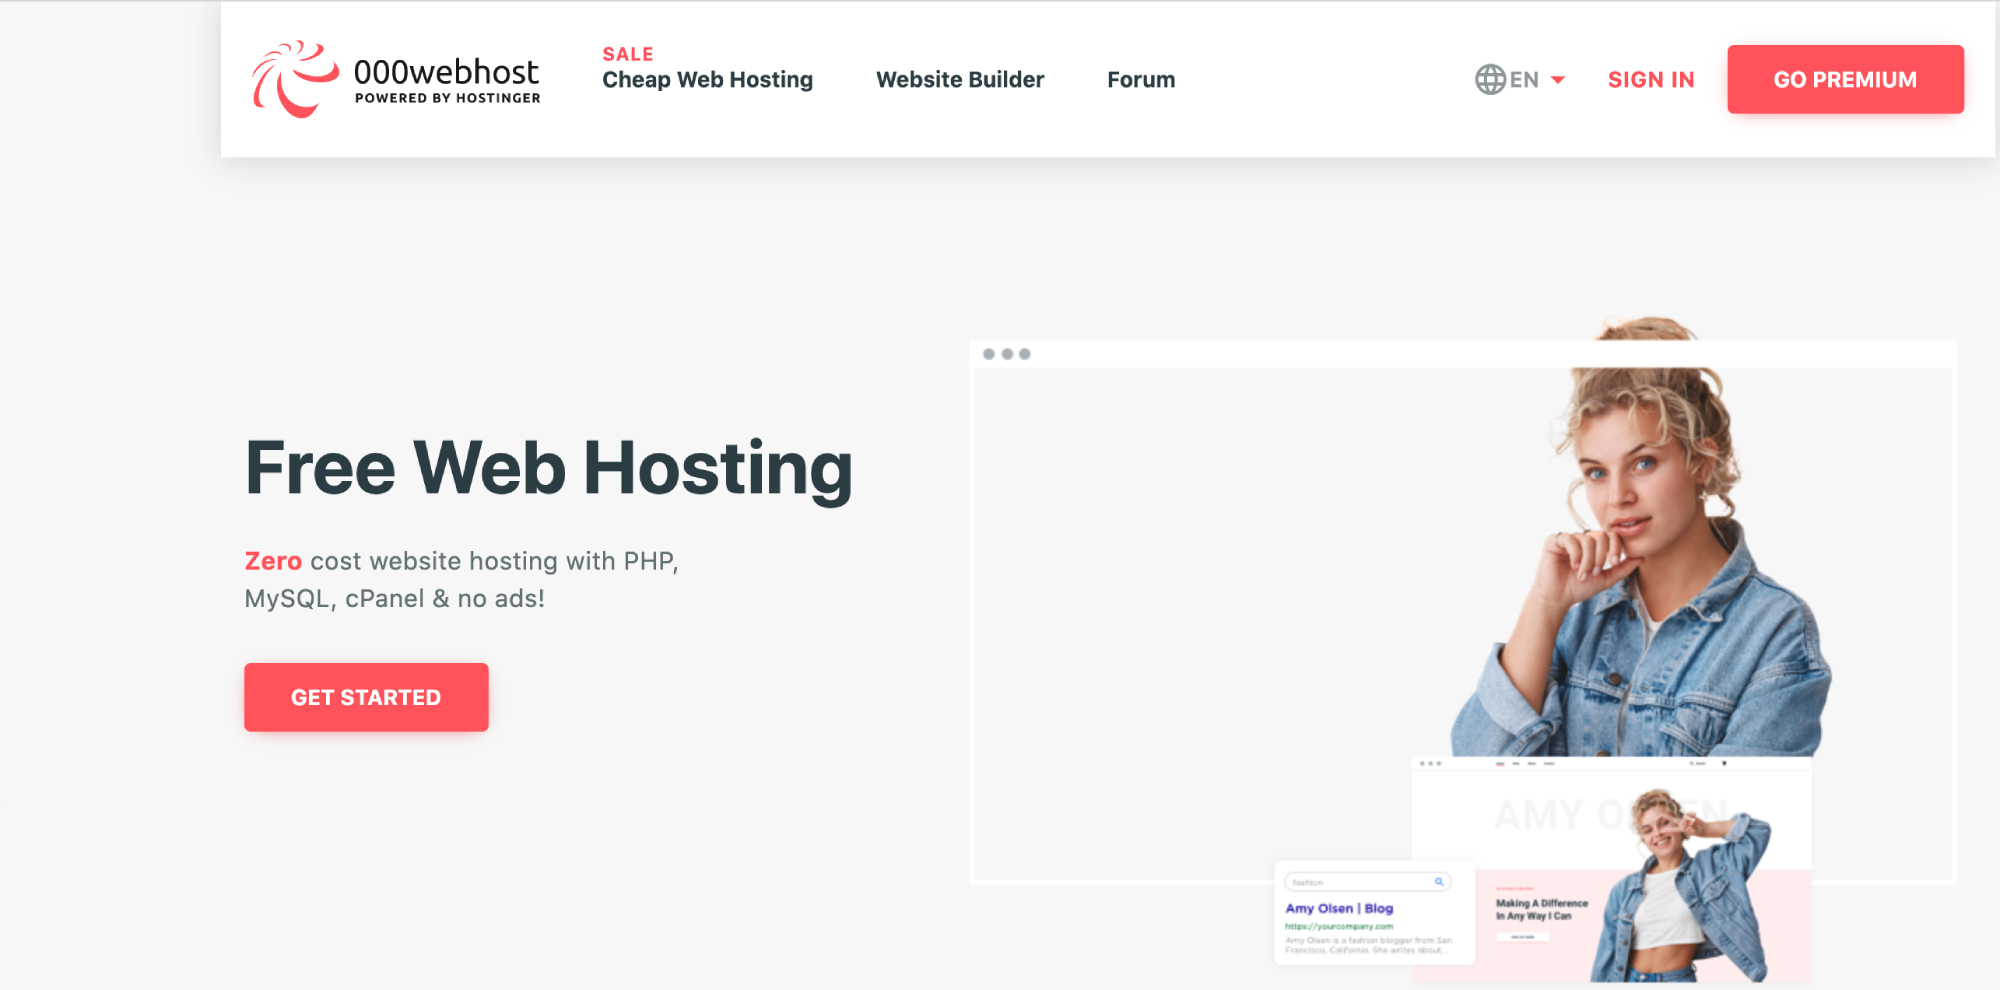 000webhosting offers free web hosting